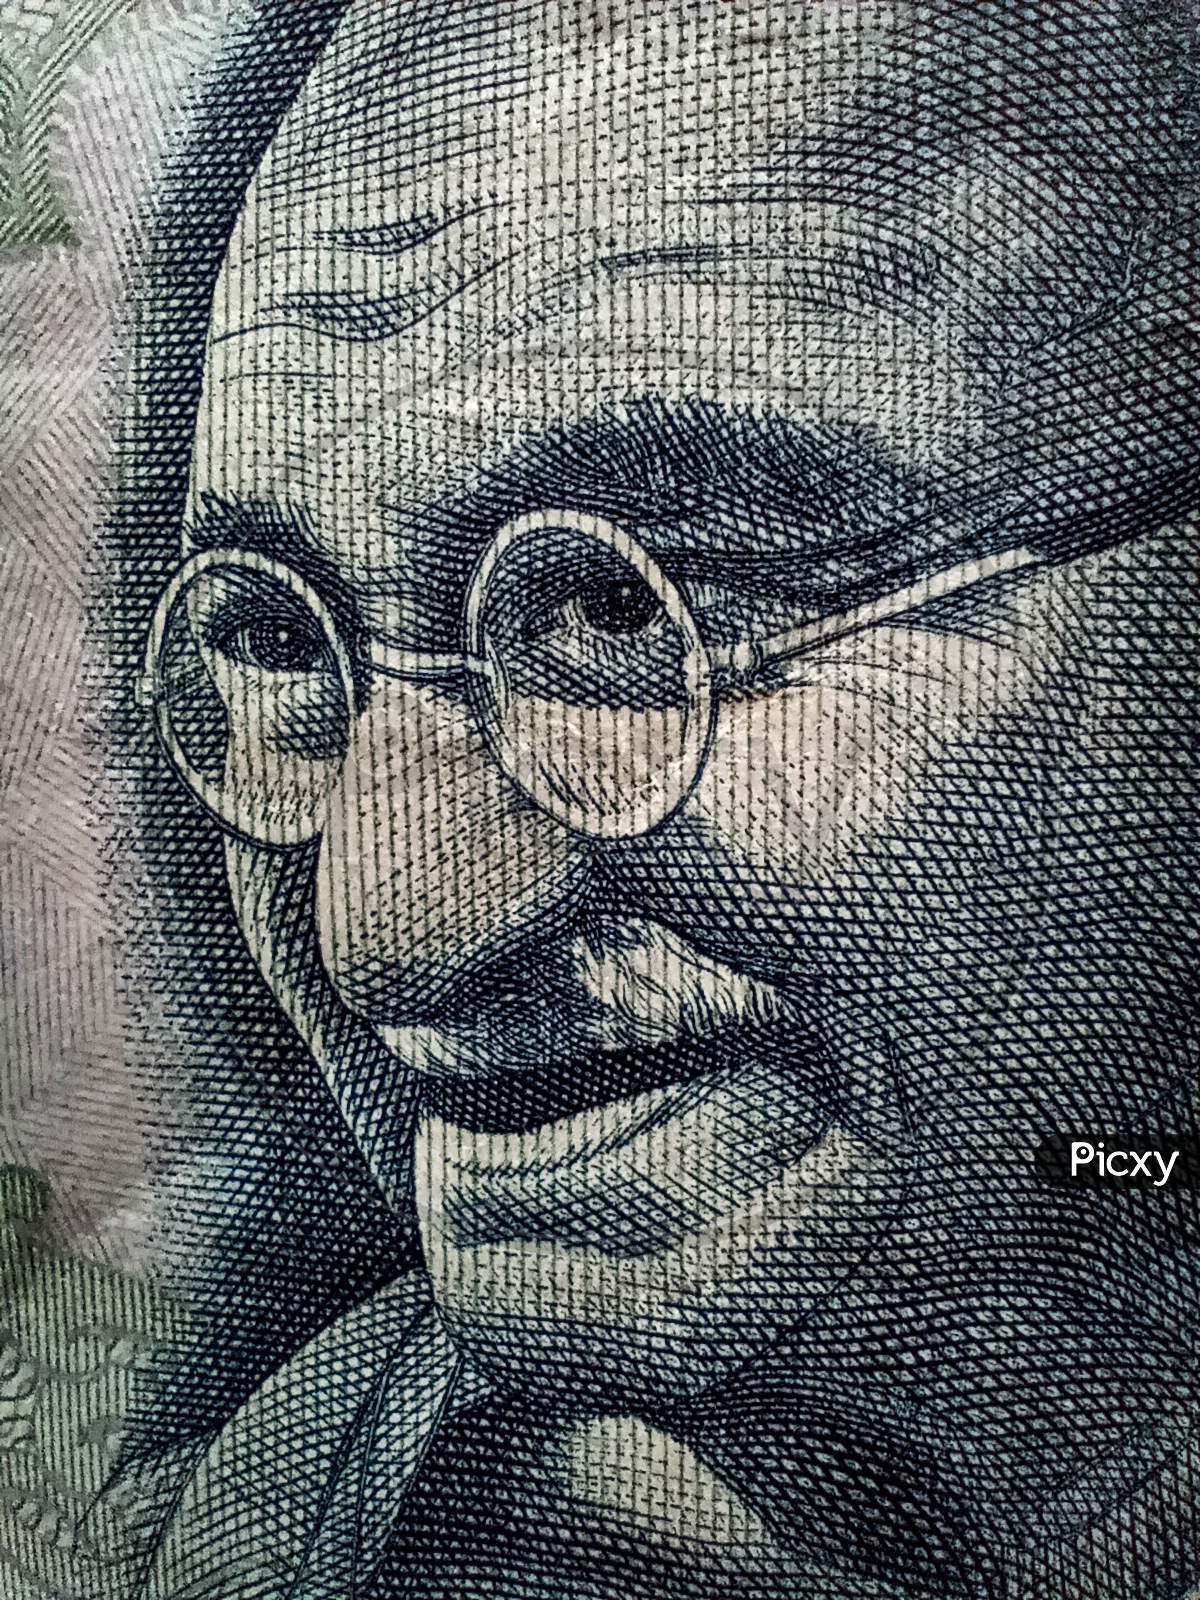 Mahatma gadhiji hundred rupees note